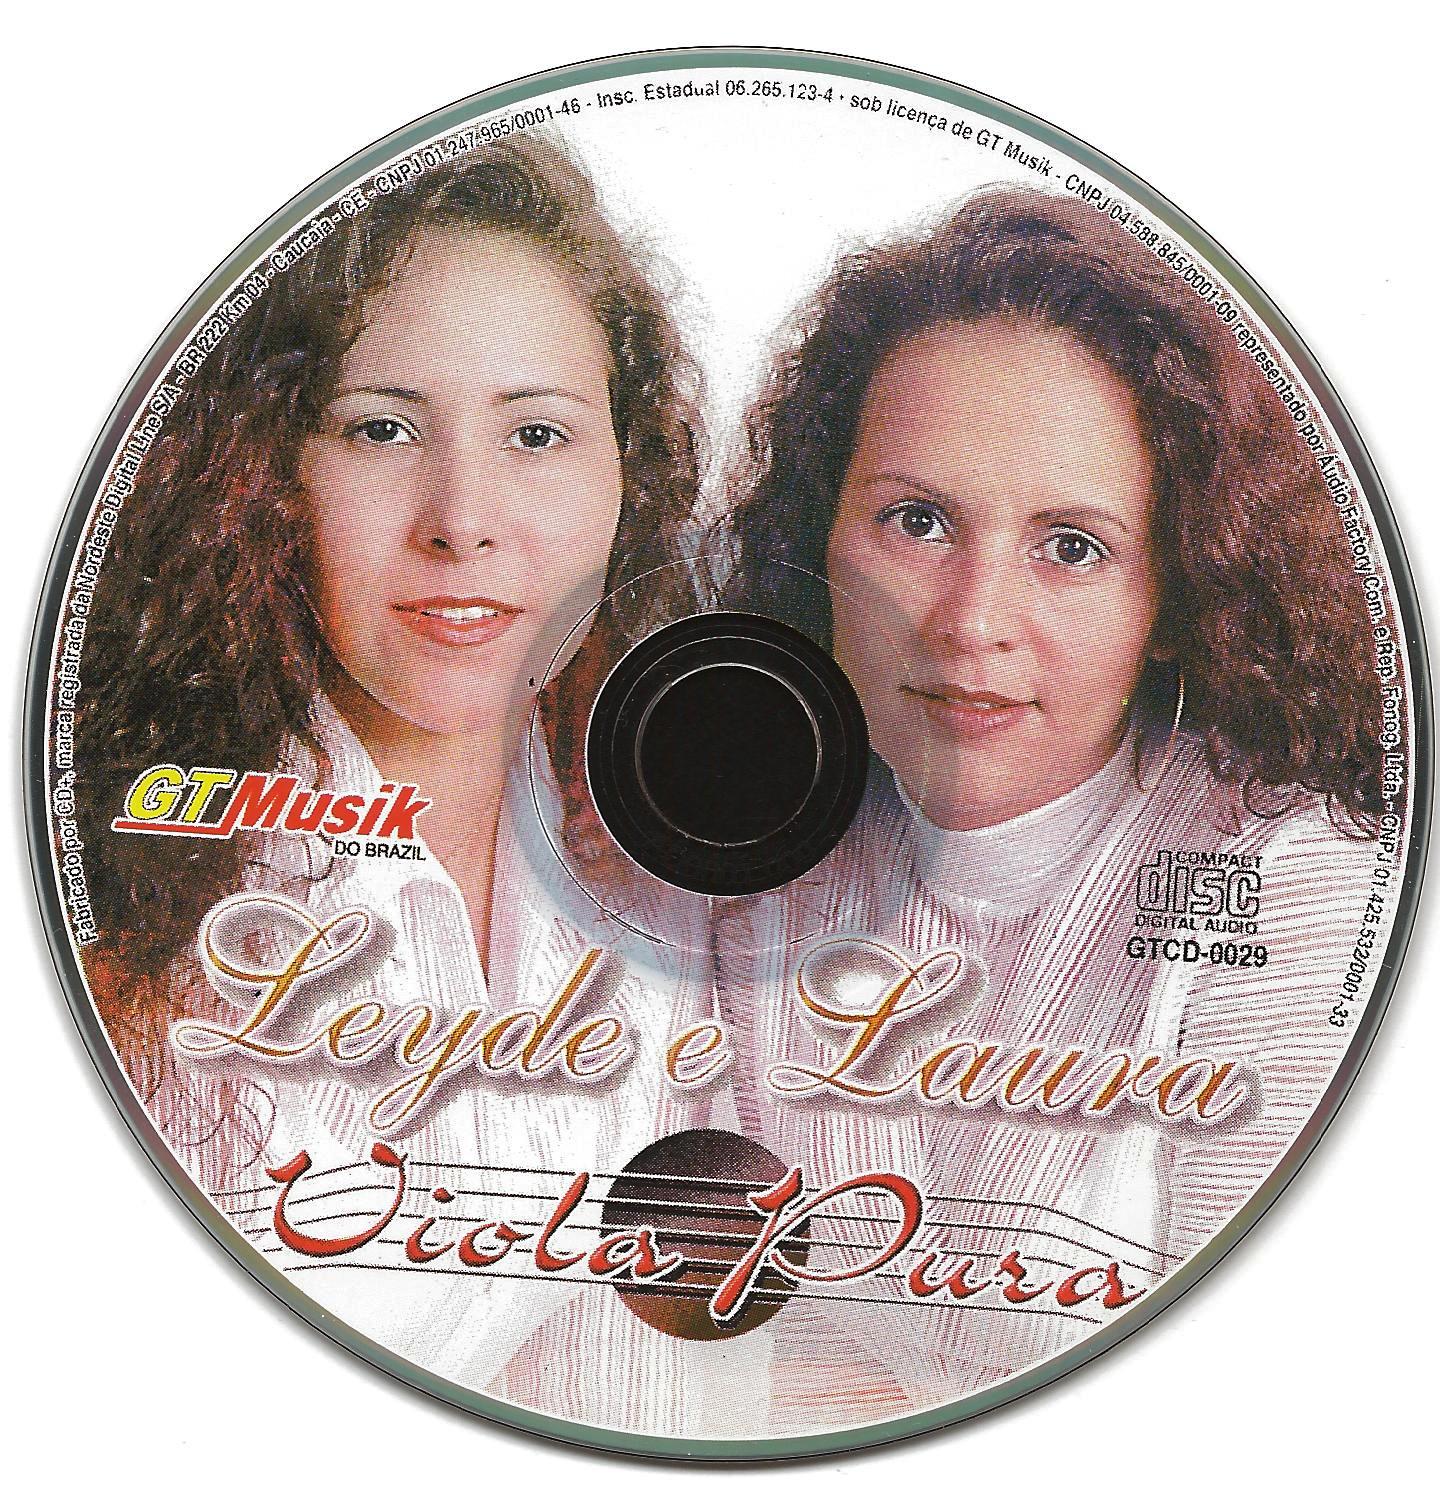 Leyde e Laura Viola Pura Label